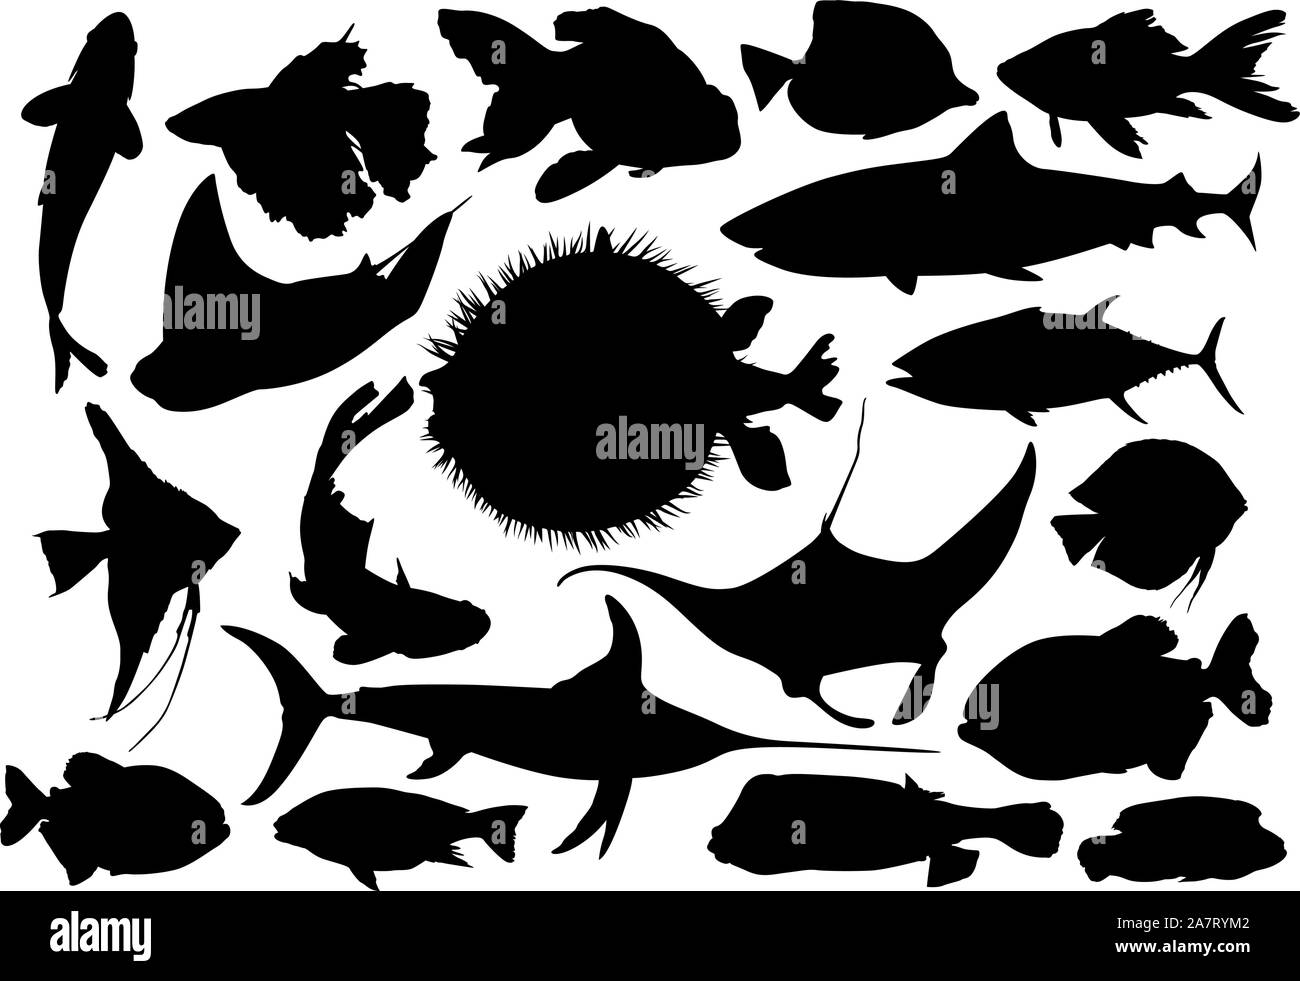 Aquatic fish black vector silhouettes Stock Vector